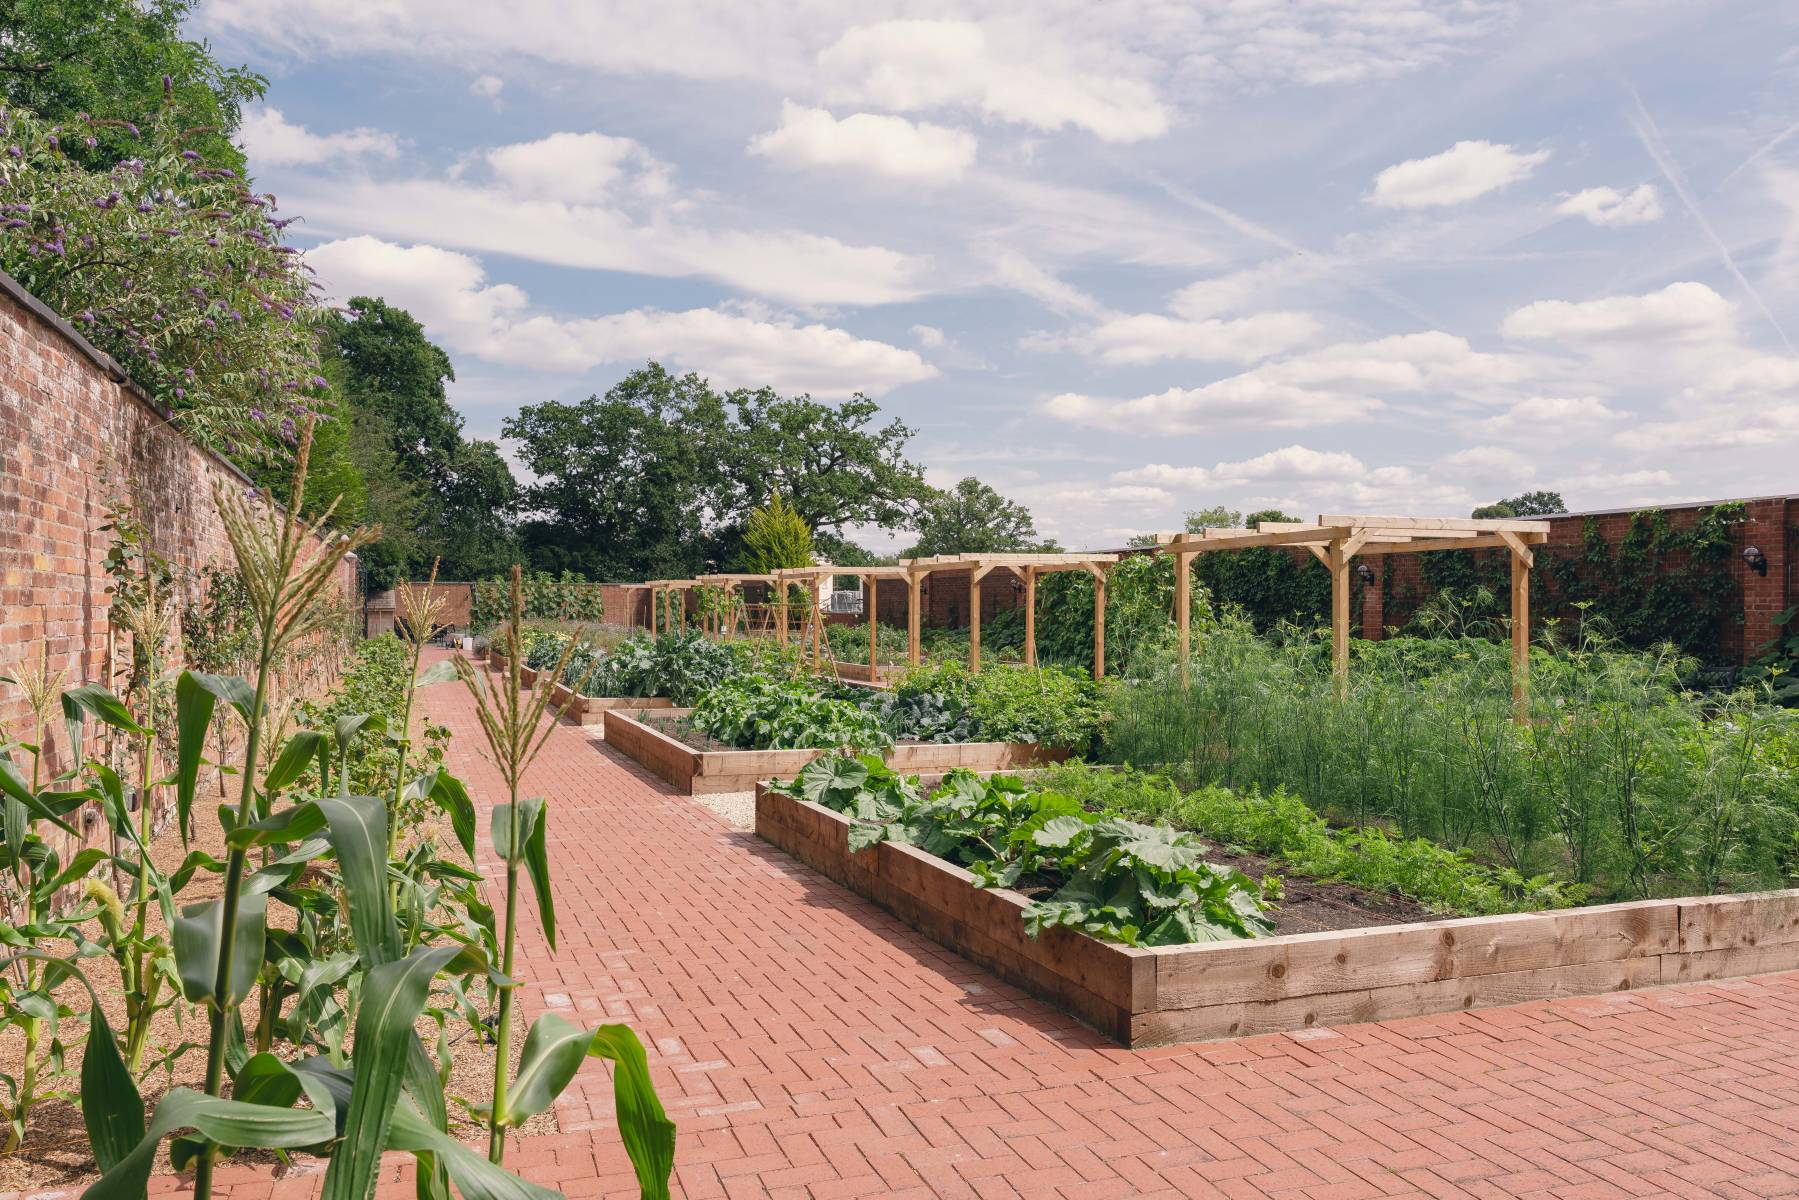 The Walled garden at Fairmont Windsor Park